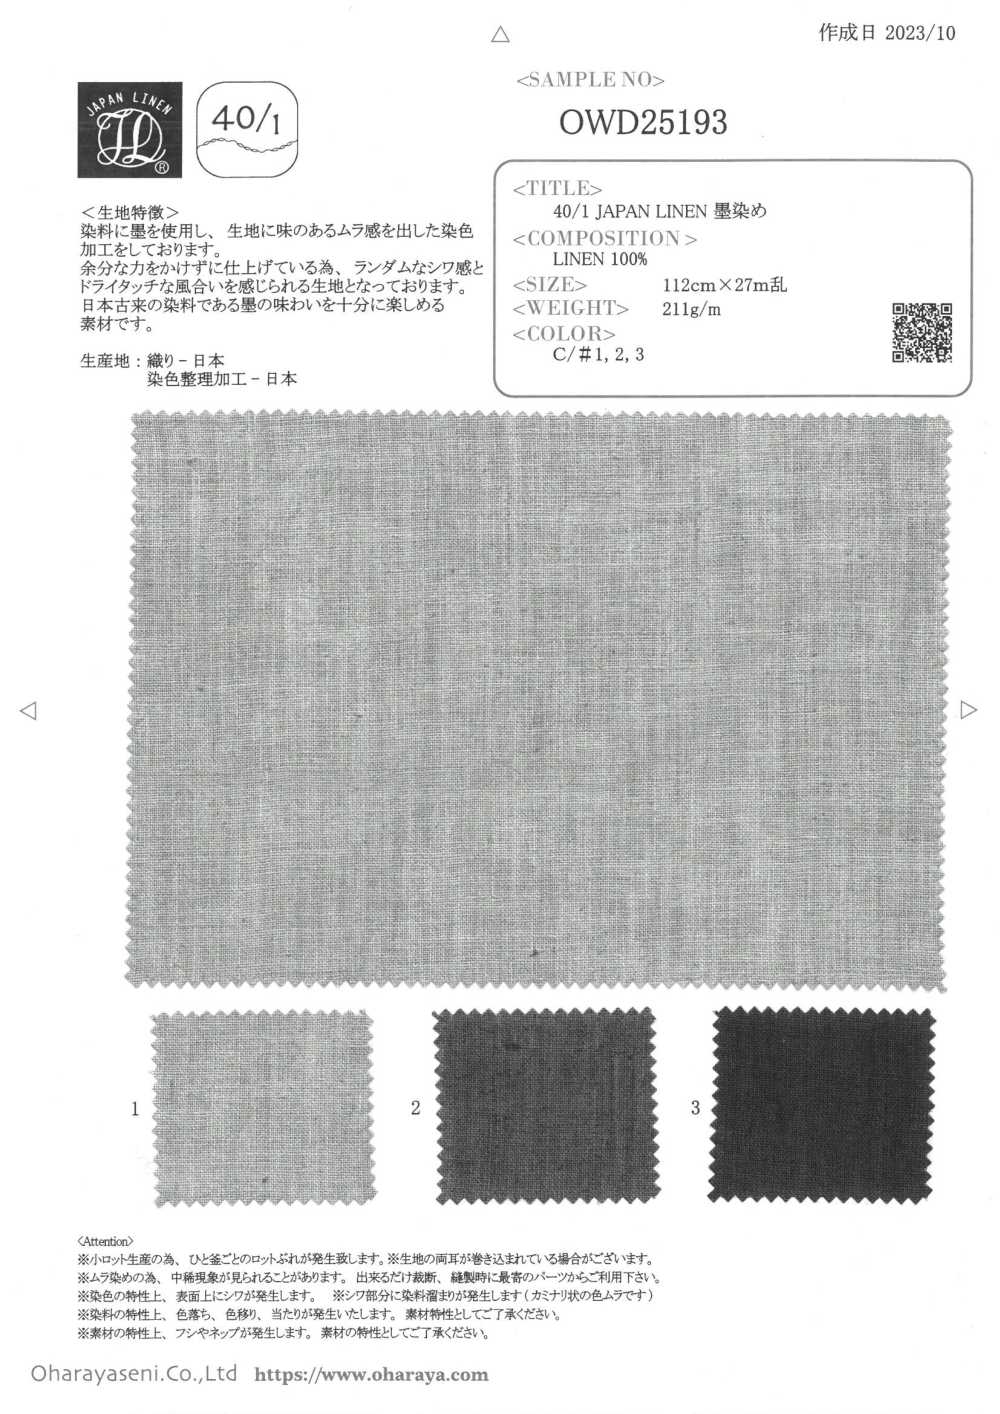 OWD25193 40/1 JAPAN LEINEN Sumi-gefärbt[Textilgewebe] Oharayaseni